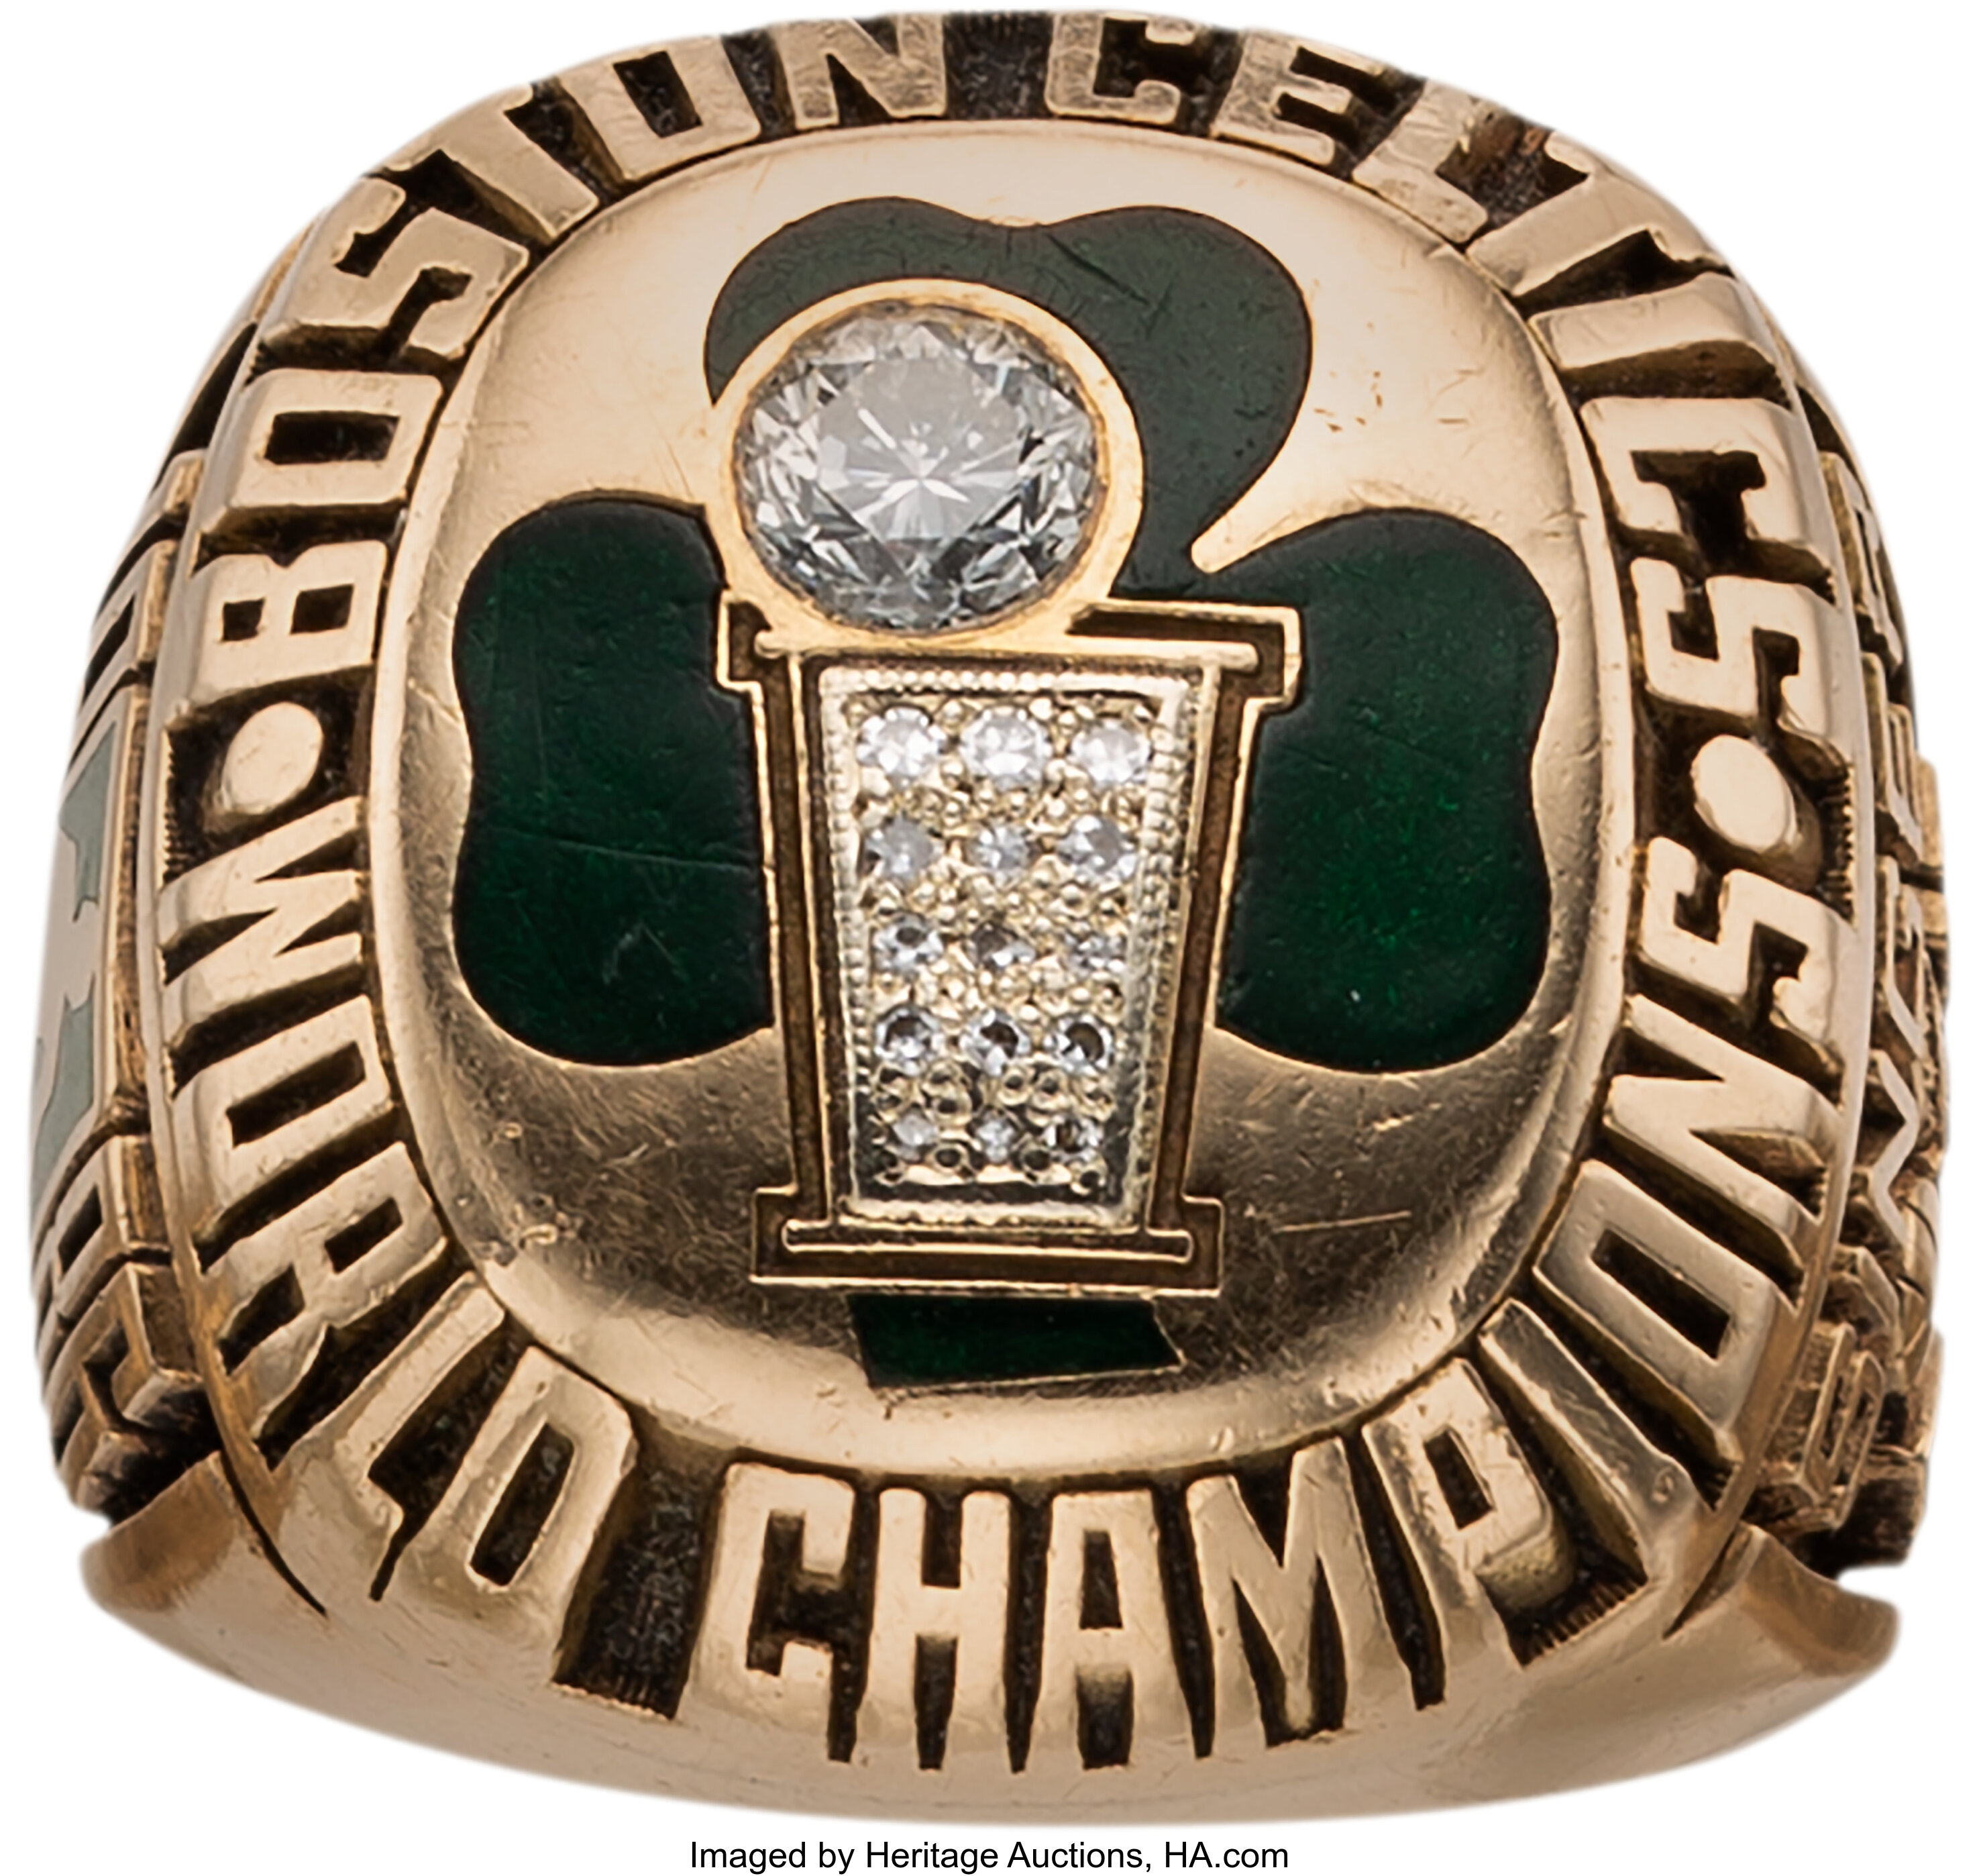 1986 Larry O'Brien Championship Trophy - Boston Celtics History